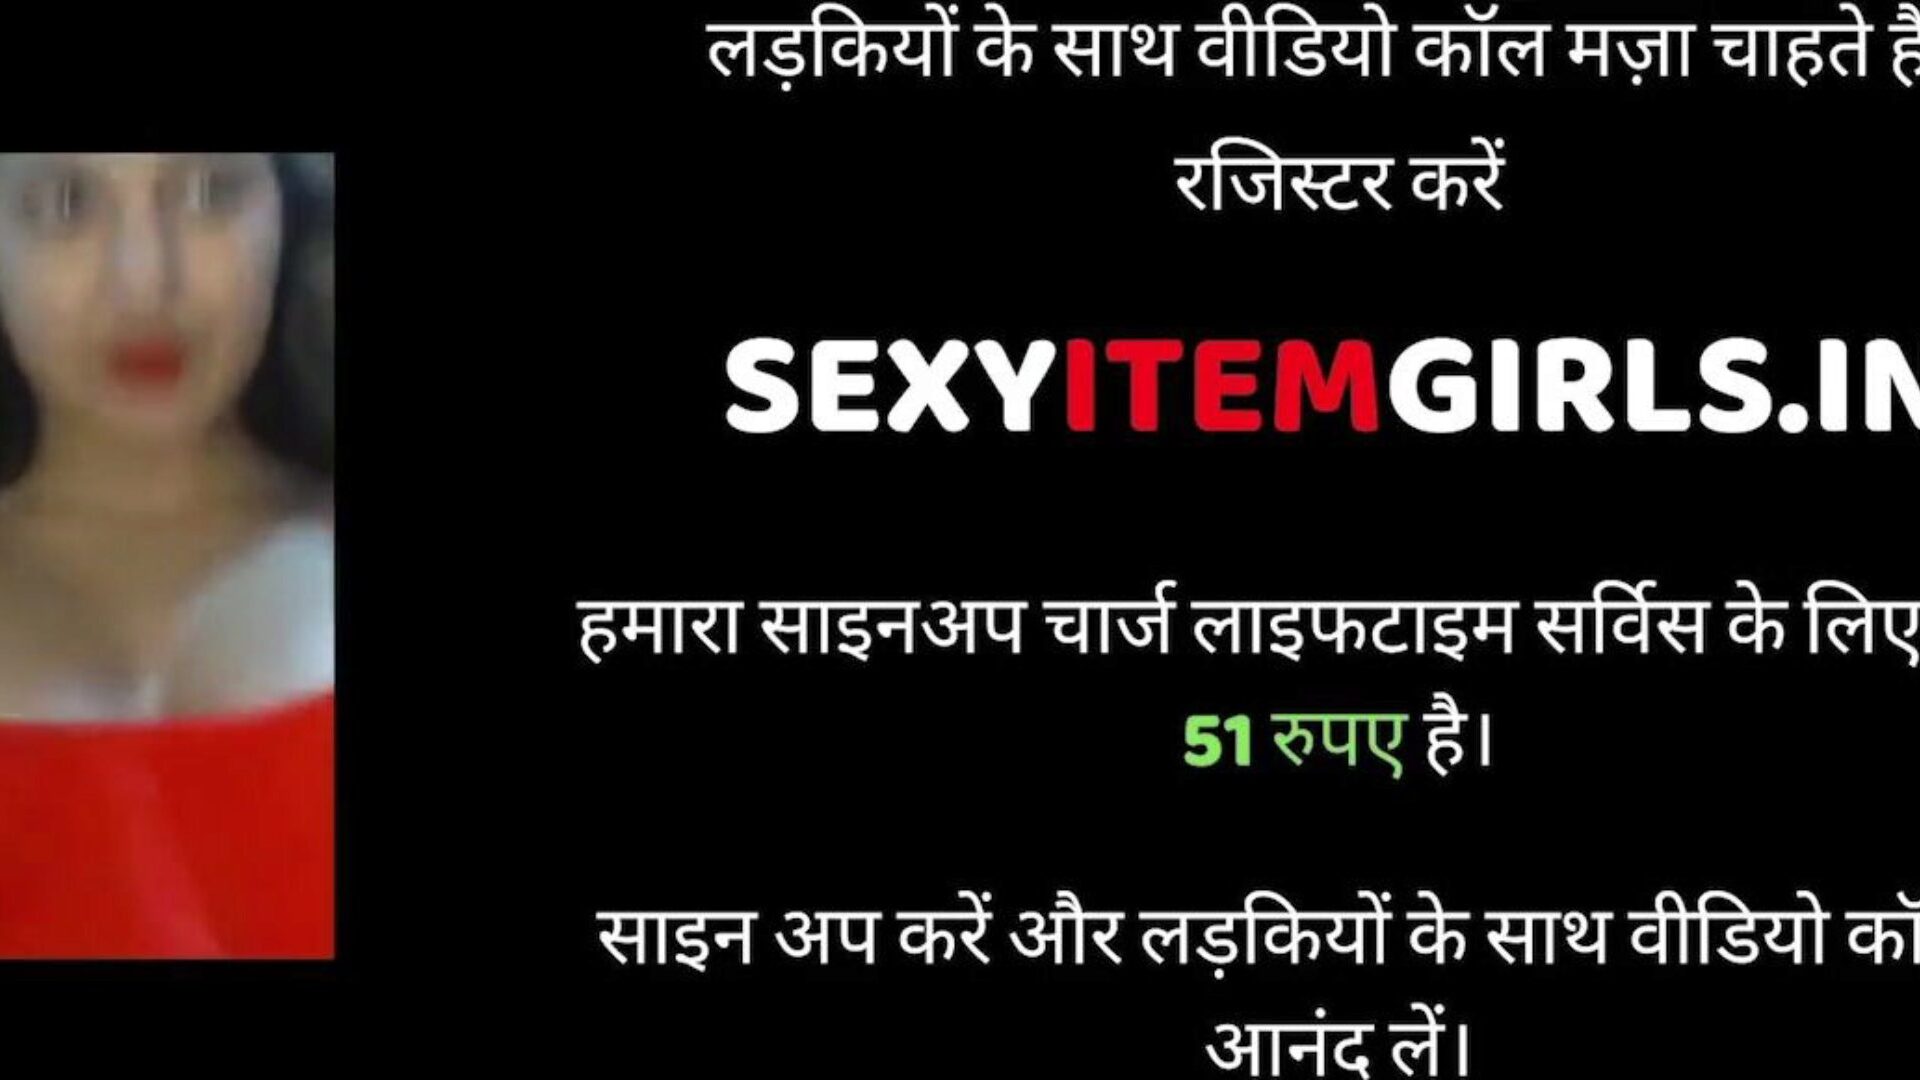 indisk mand & kone sex, gratis sex xnxx porno 95: xhamster se indisk mand & kone sex video på xhamster, den fedeste hd pukkel tube site med masser af gratis-for-alle sex xnxx hardcore & sperm i fisse pornografi film